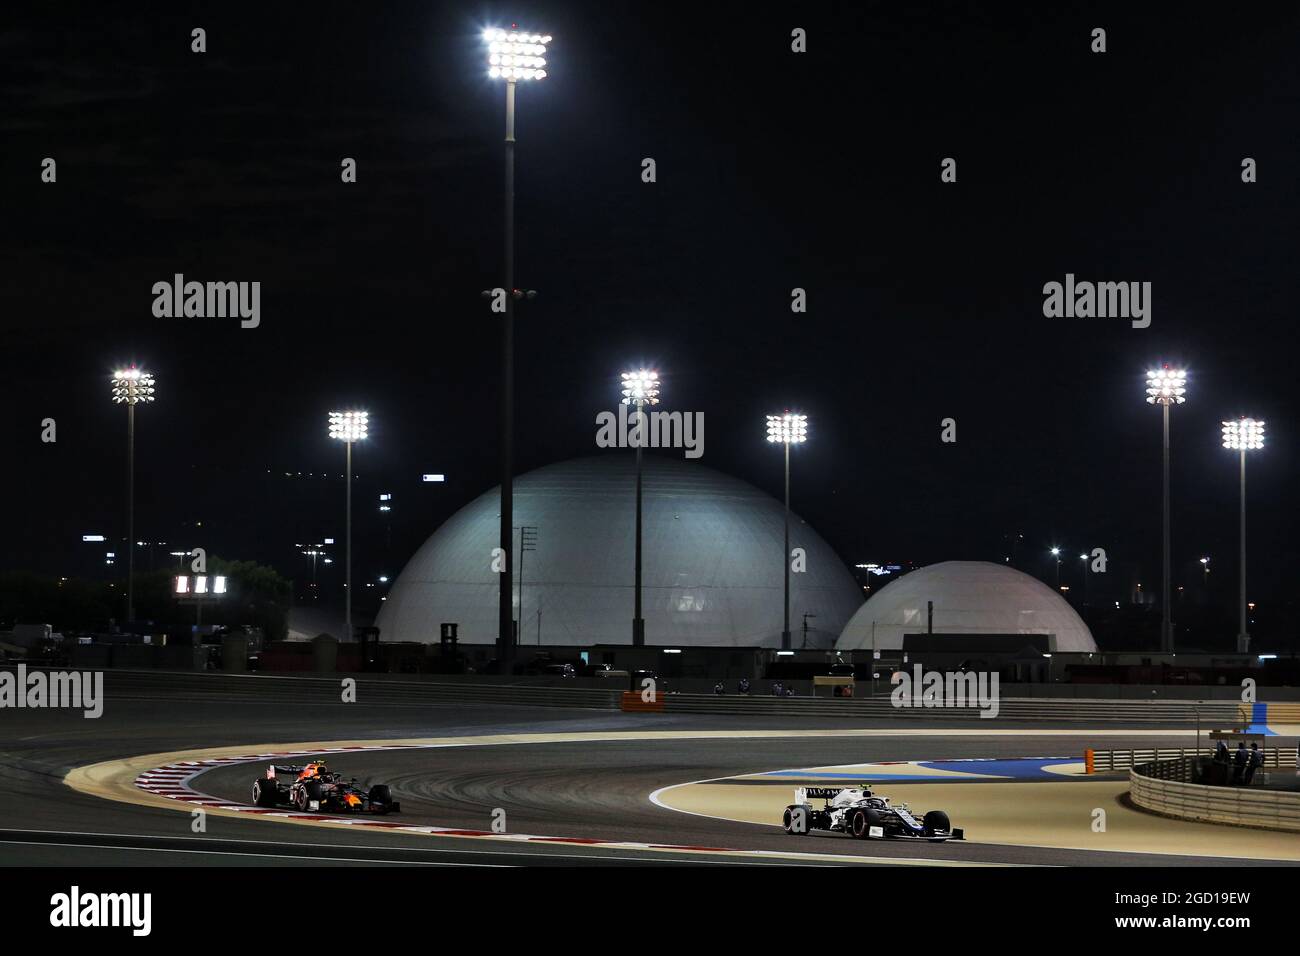 Nicholas Latifi (CDN) Williams Racing FW43 et Alexander Albon (THA) Red Bull Racing RB16. Grand Prix de Bahreïn, samedi 28 novembre 2020. Sakhir, Bahreïn. Banque D'Images